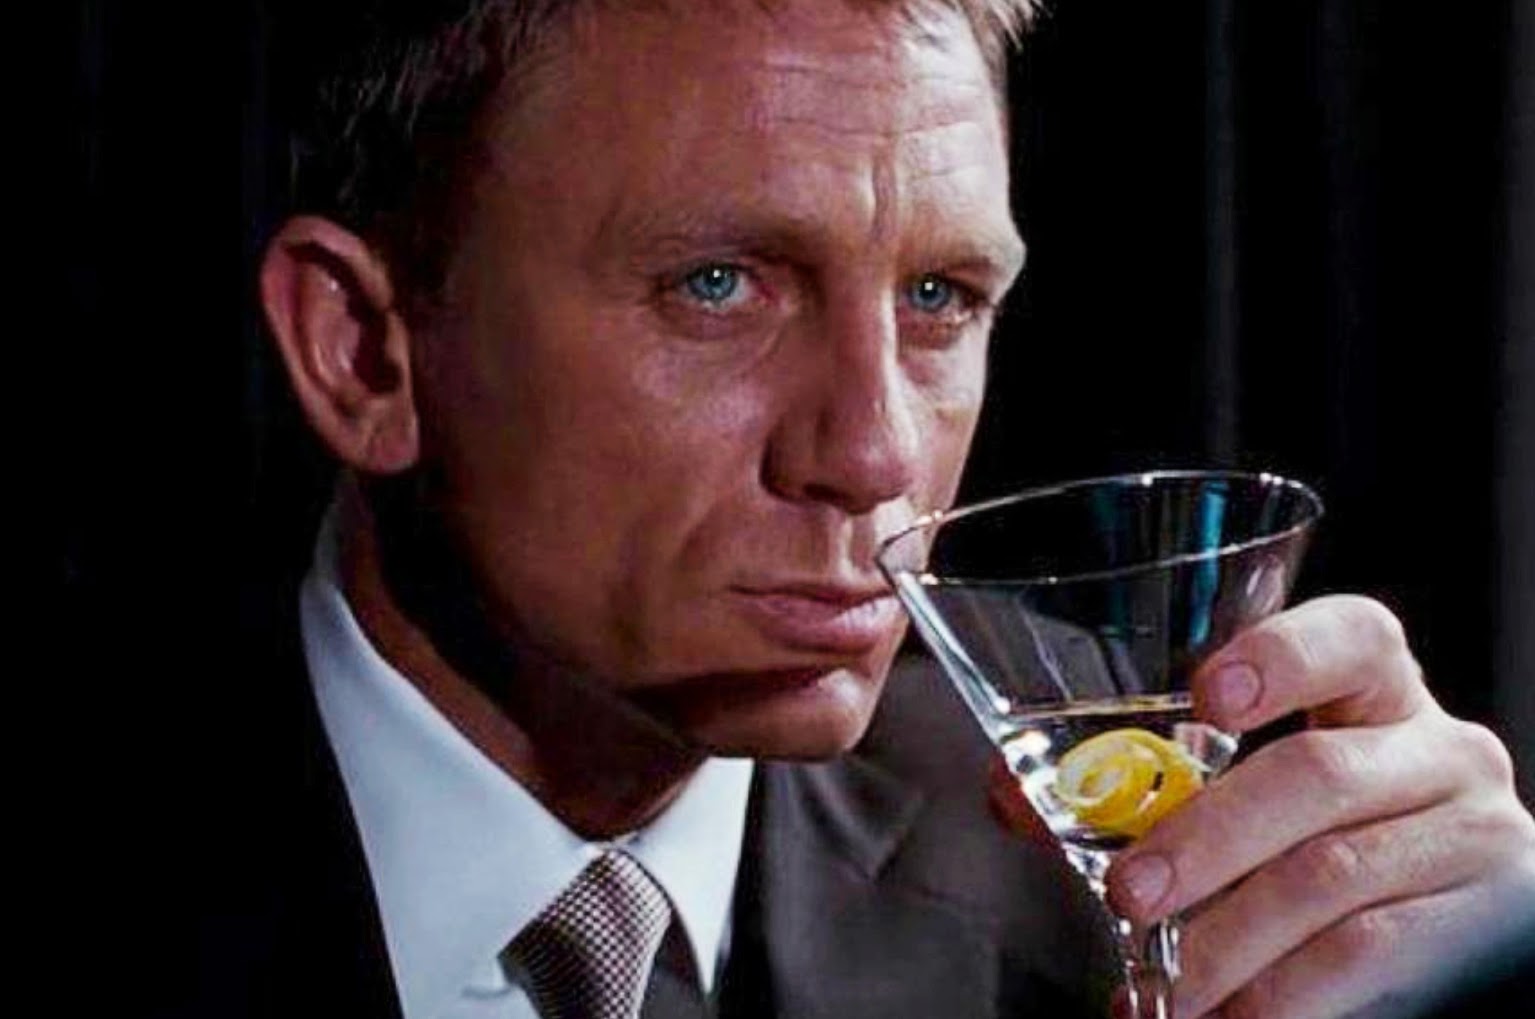 Daniel Craig, James Bond 007